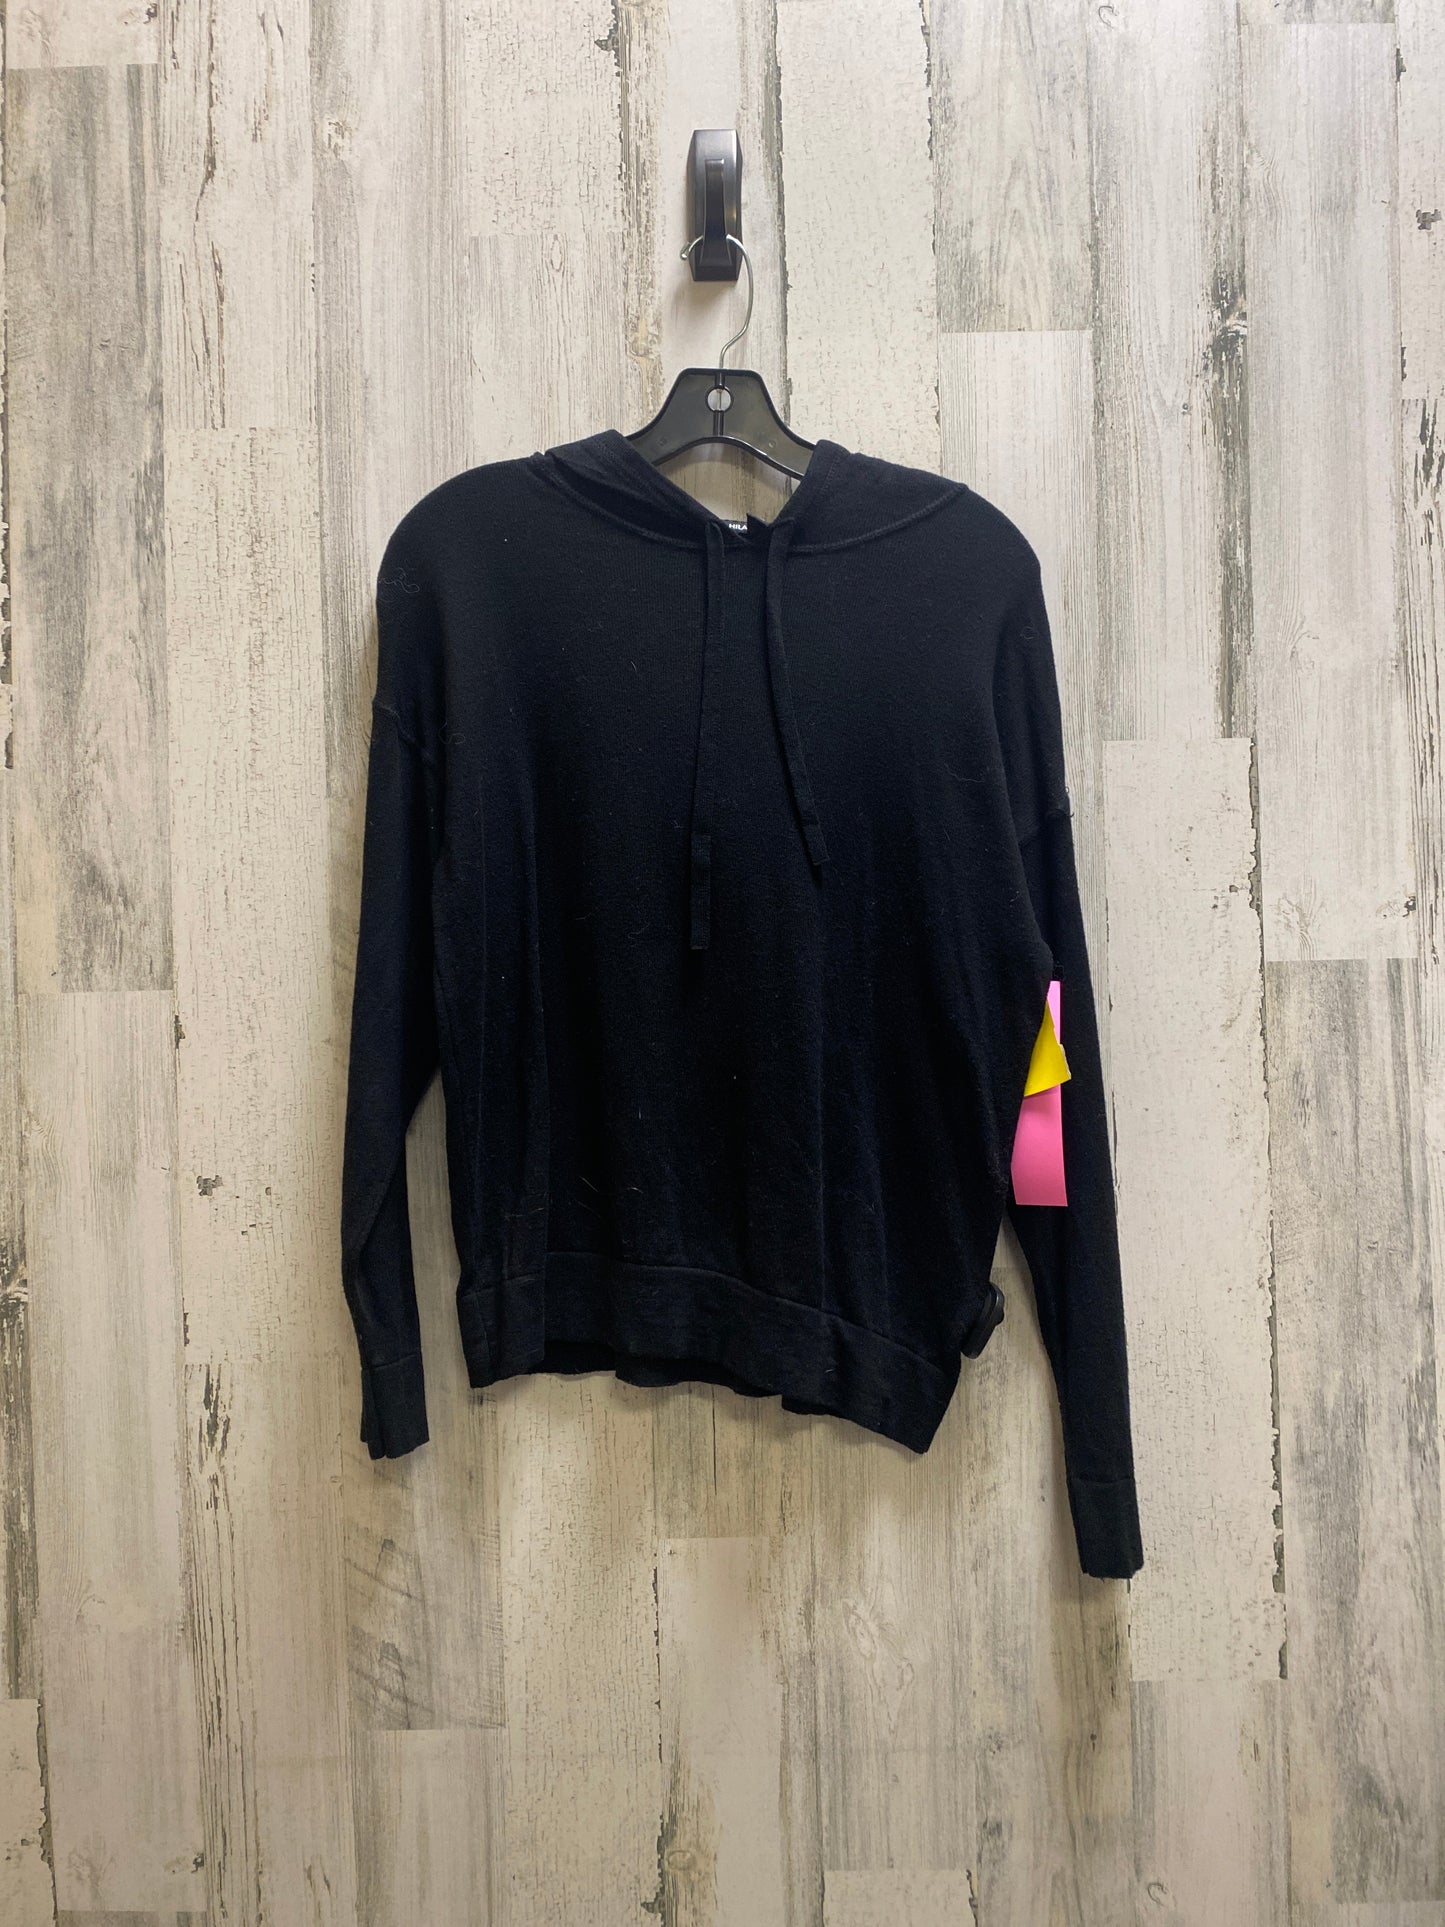 Sweater By Hilary Radley  Size: S